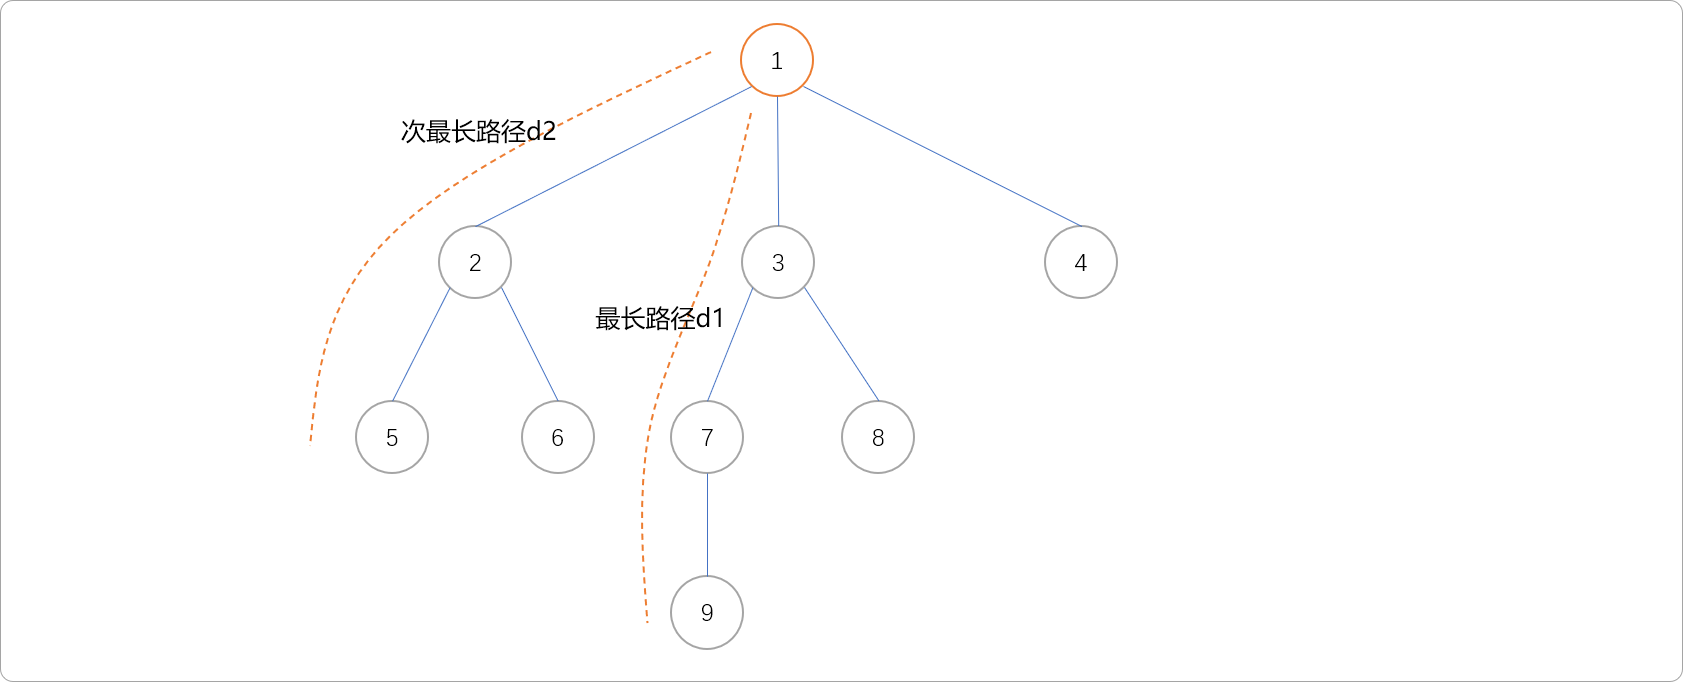 C++ 图论之树的重心和直径